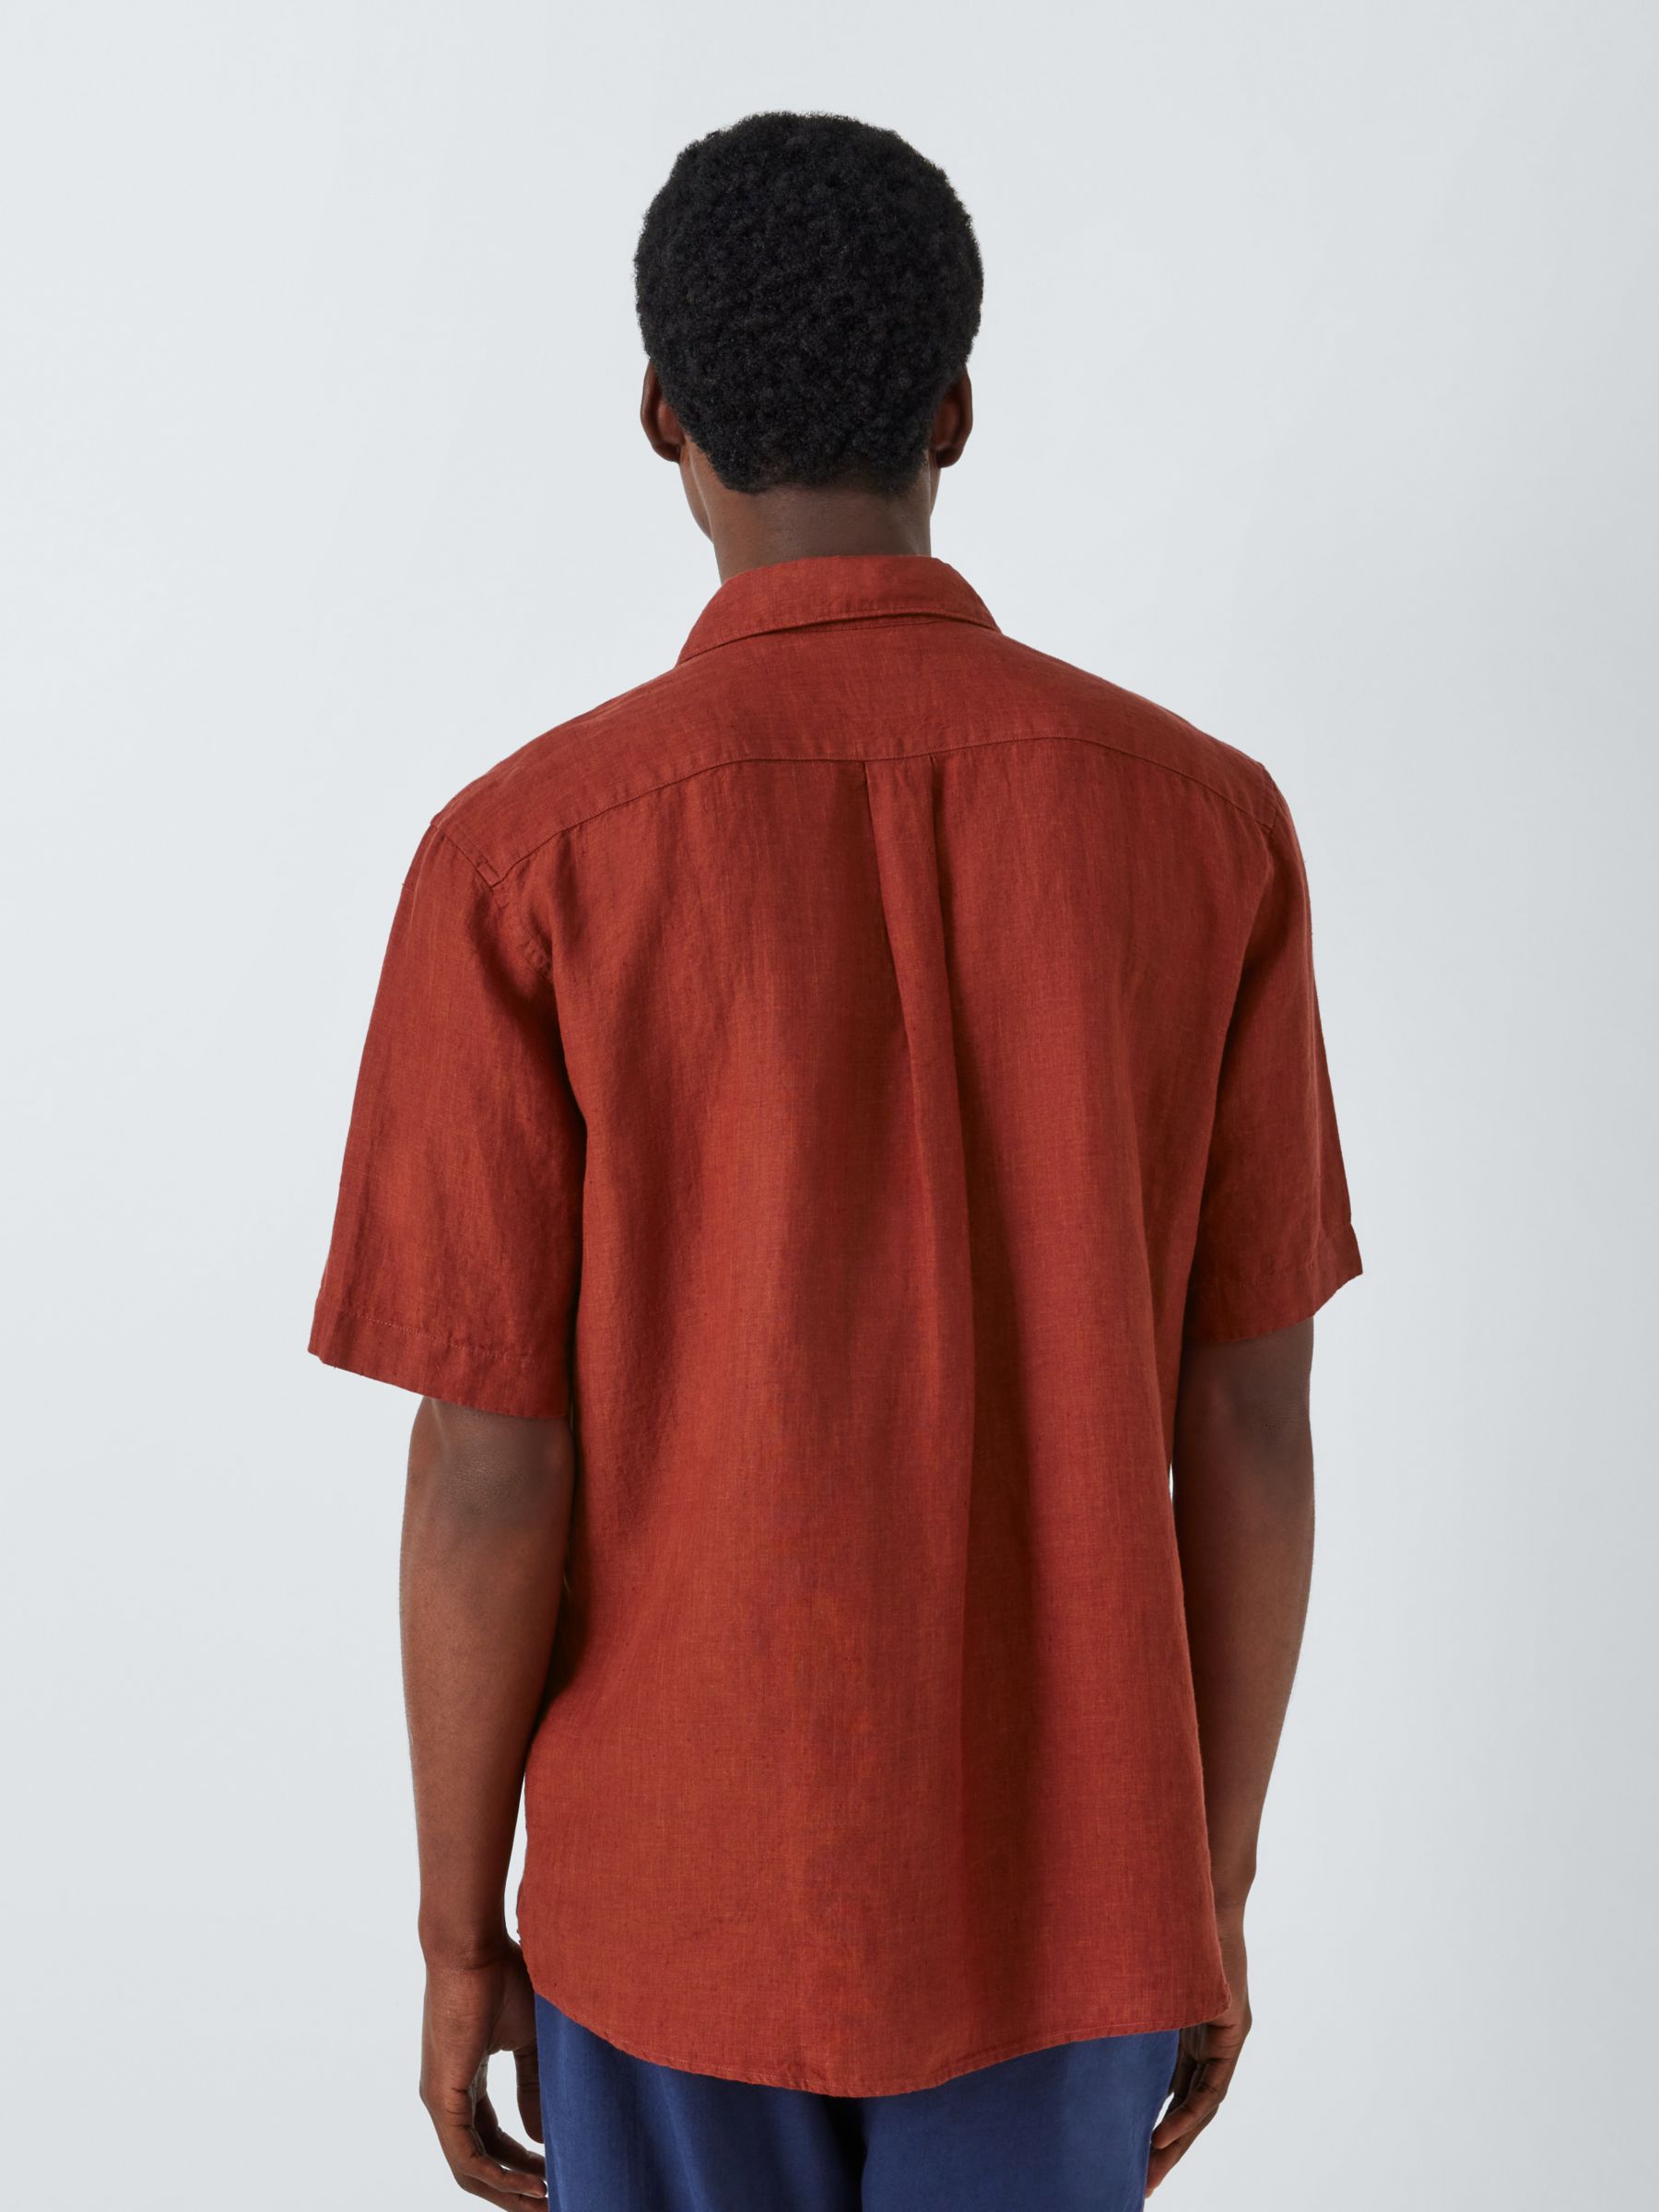 John Lewis Linen Short Sleeve Shirt, Arabian Spice, S